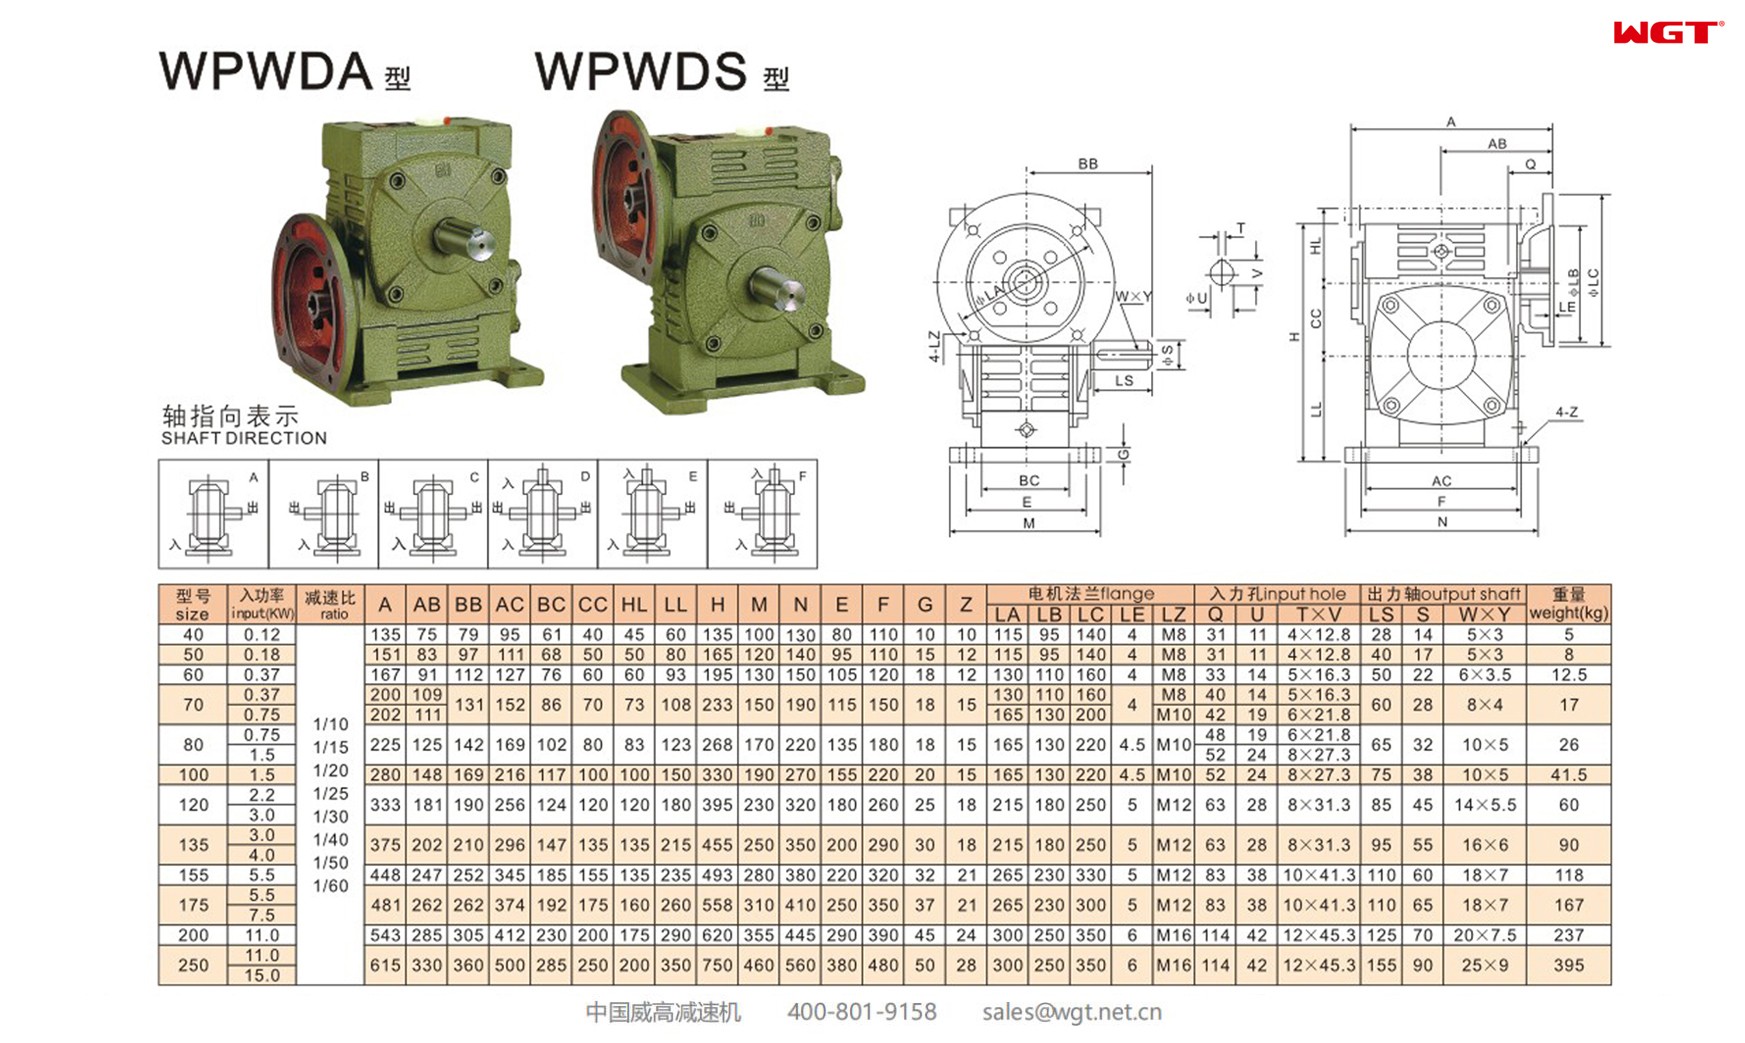 WPWDS100 worm gear reducer universal speed reducer